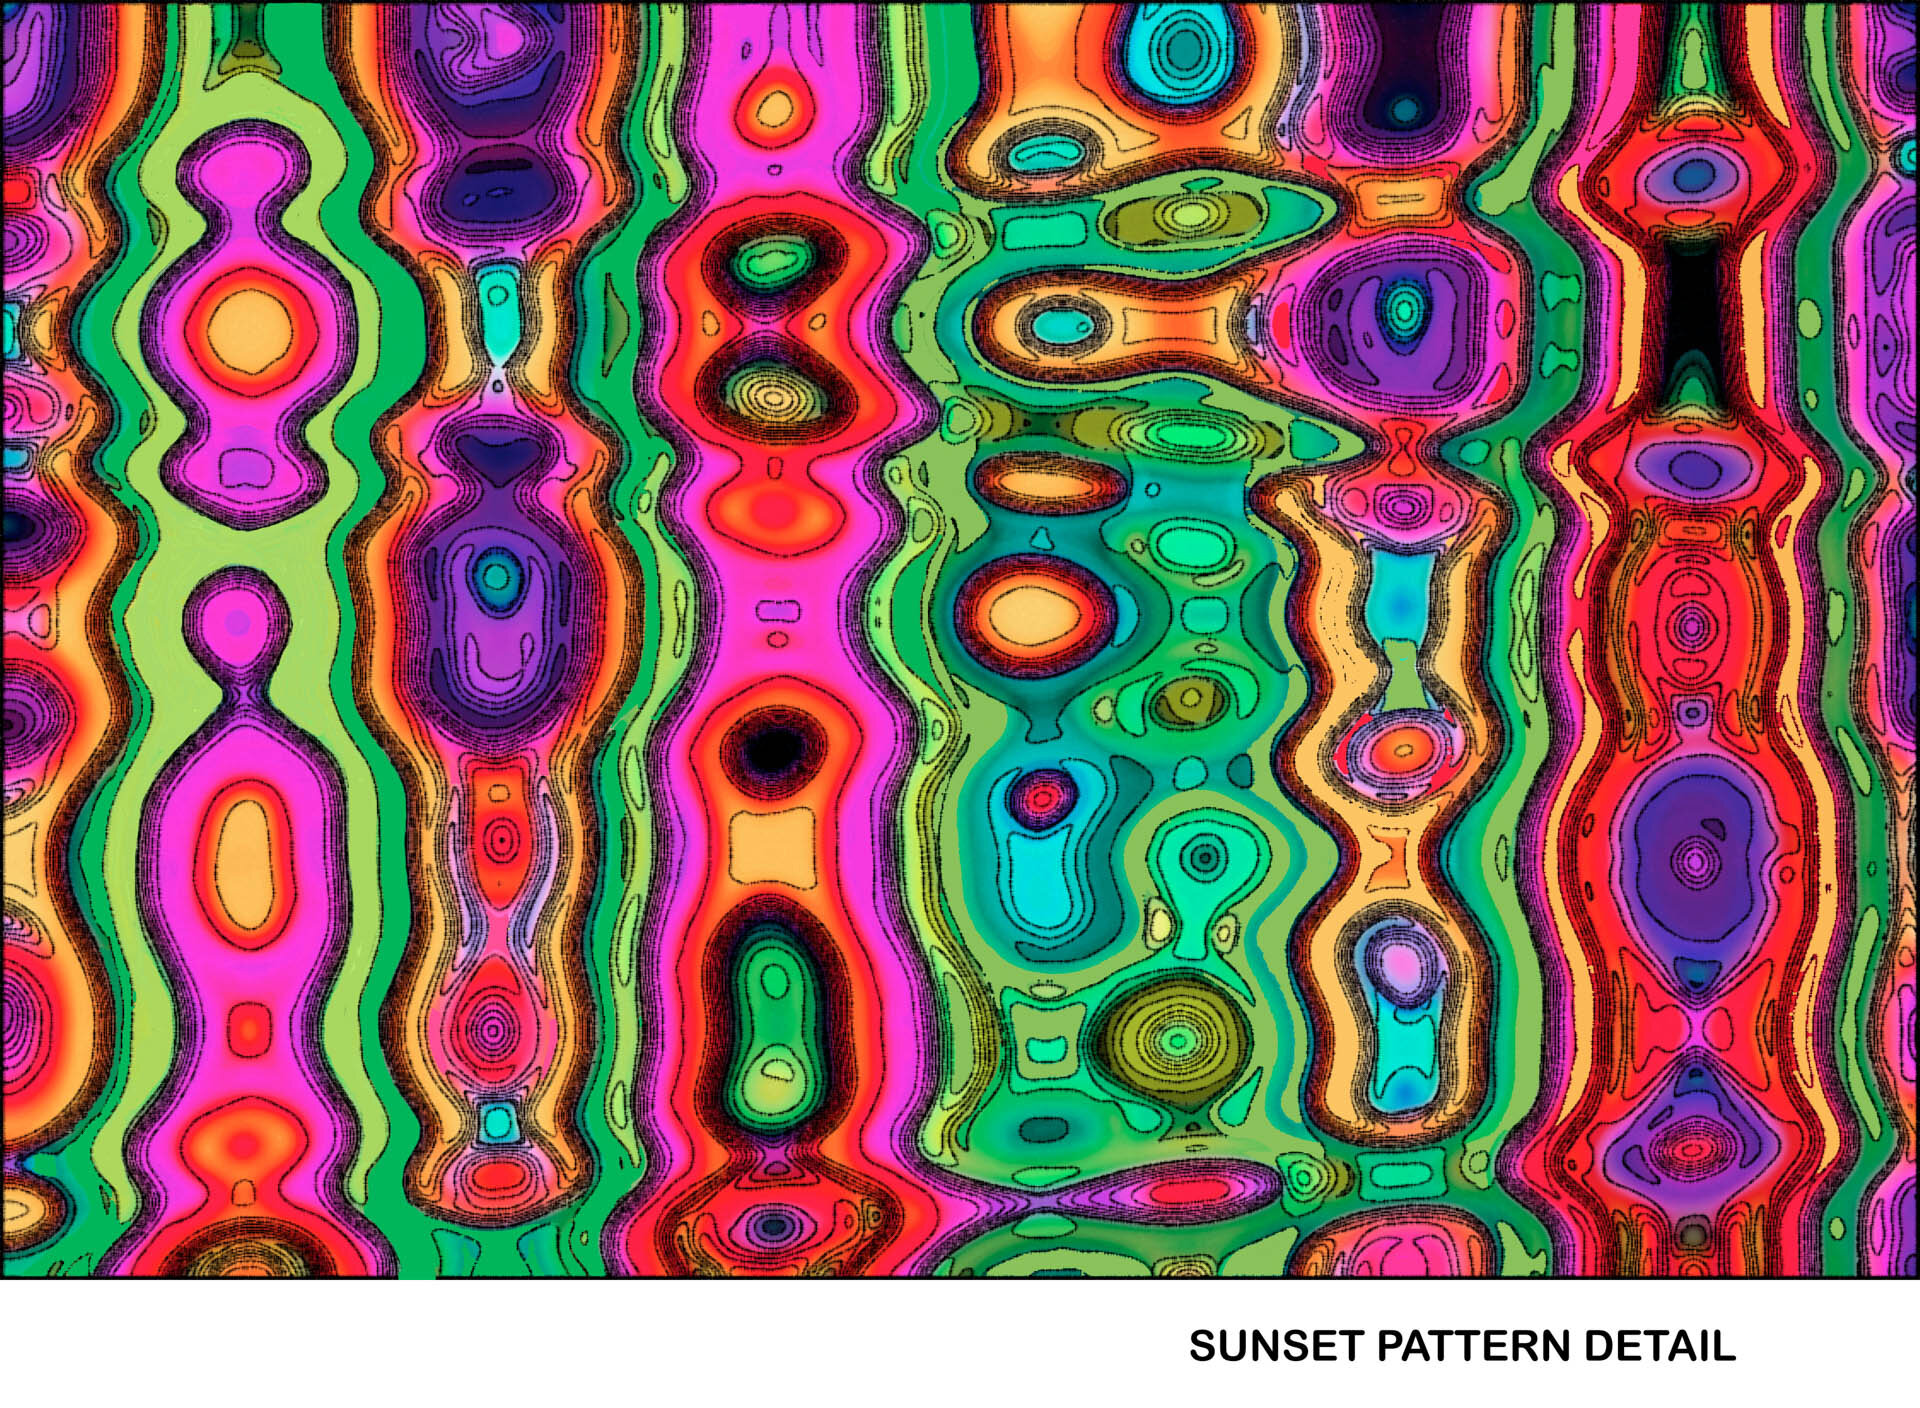 1. Sunset pattern detail adj 2 Titled.jpg